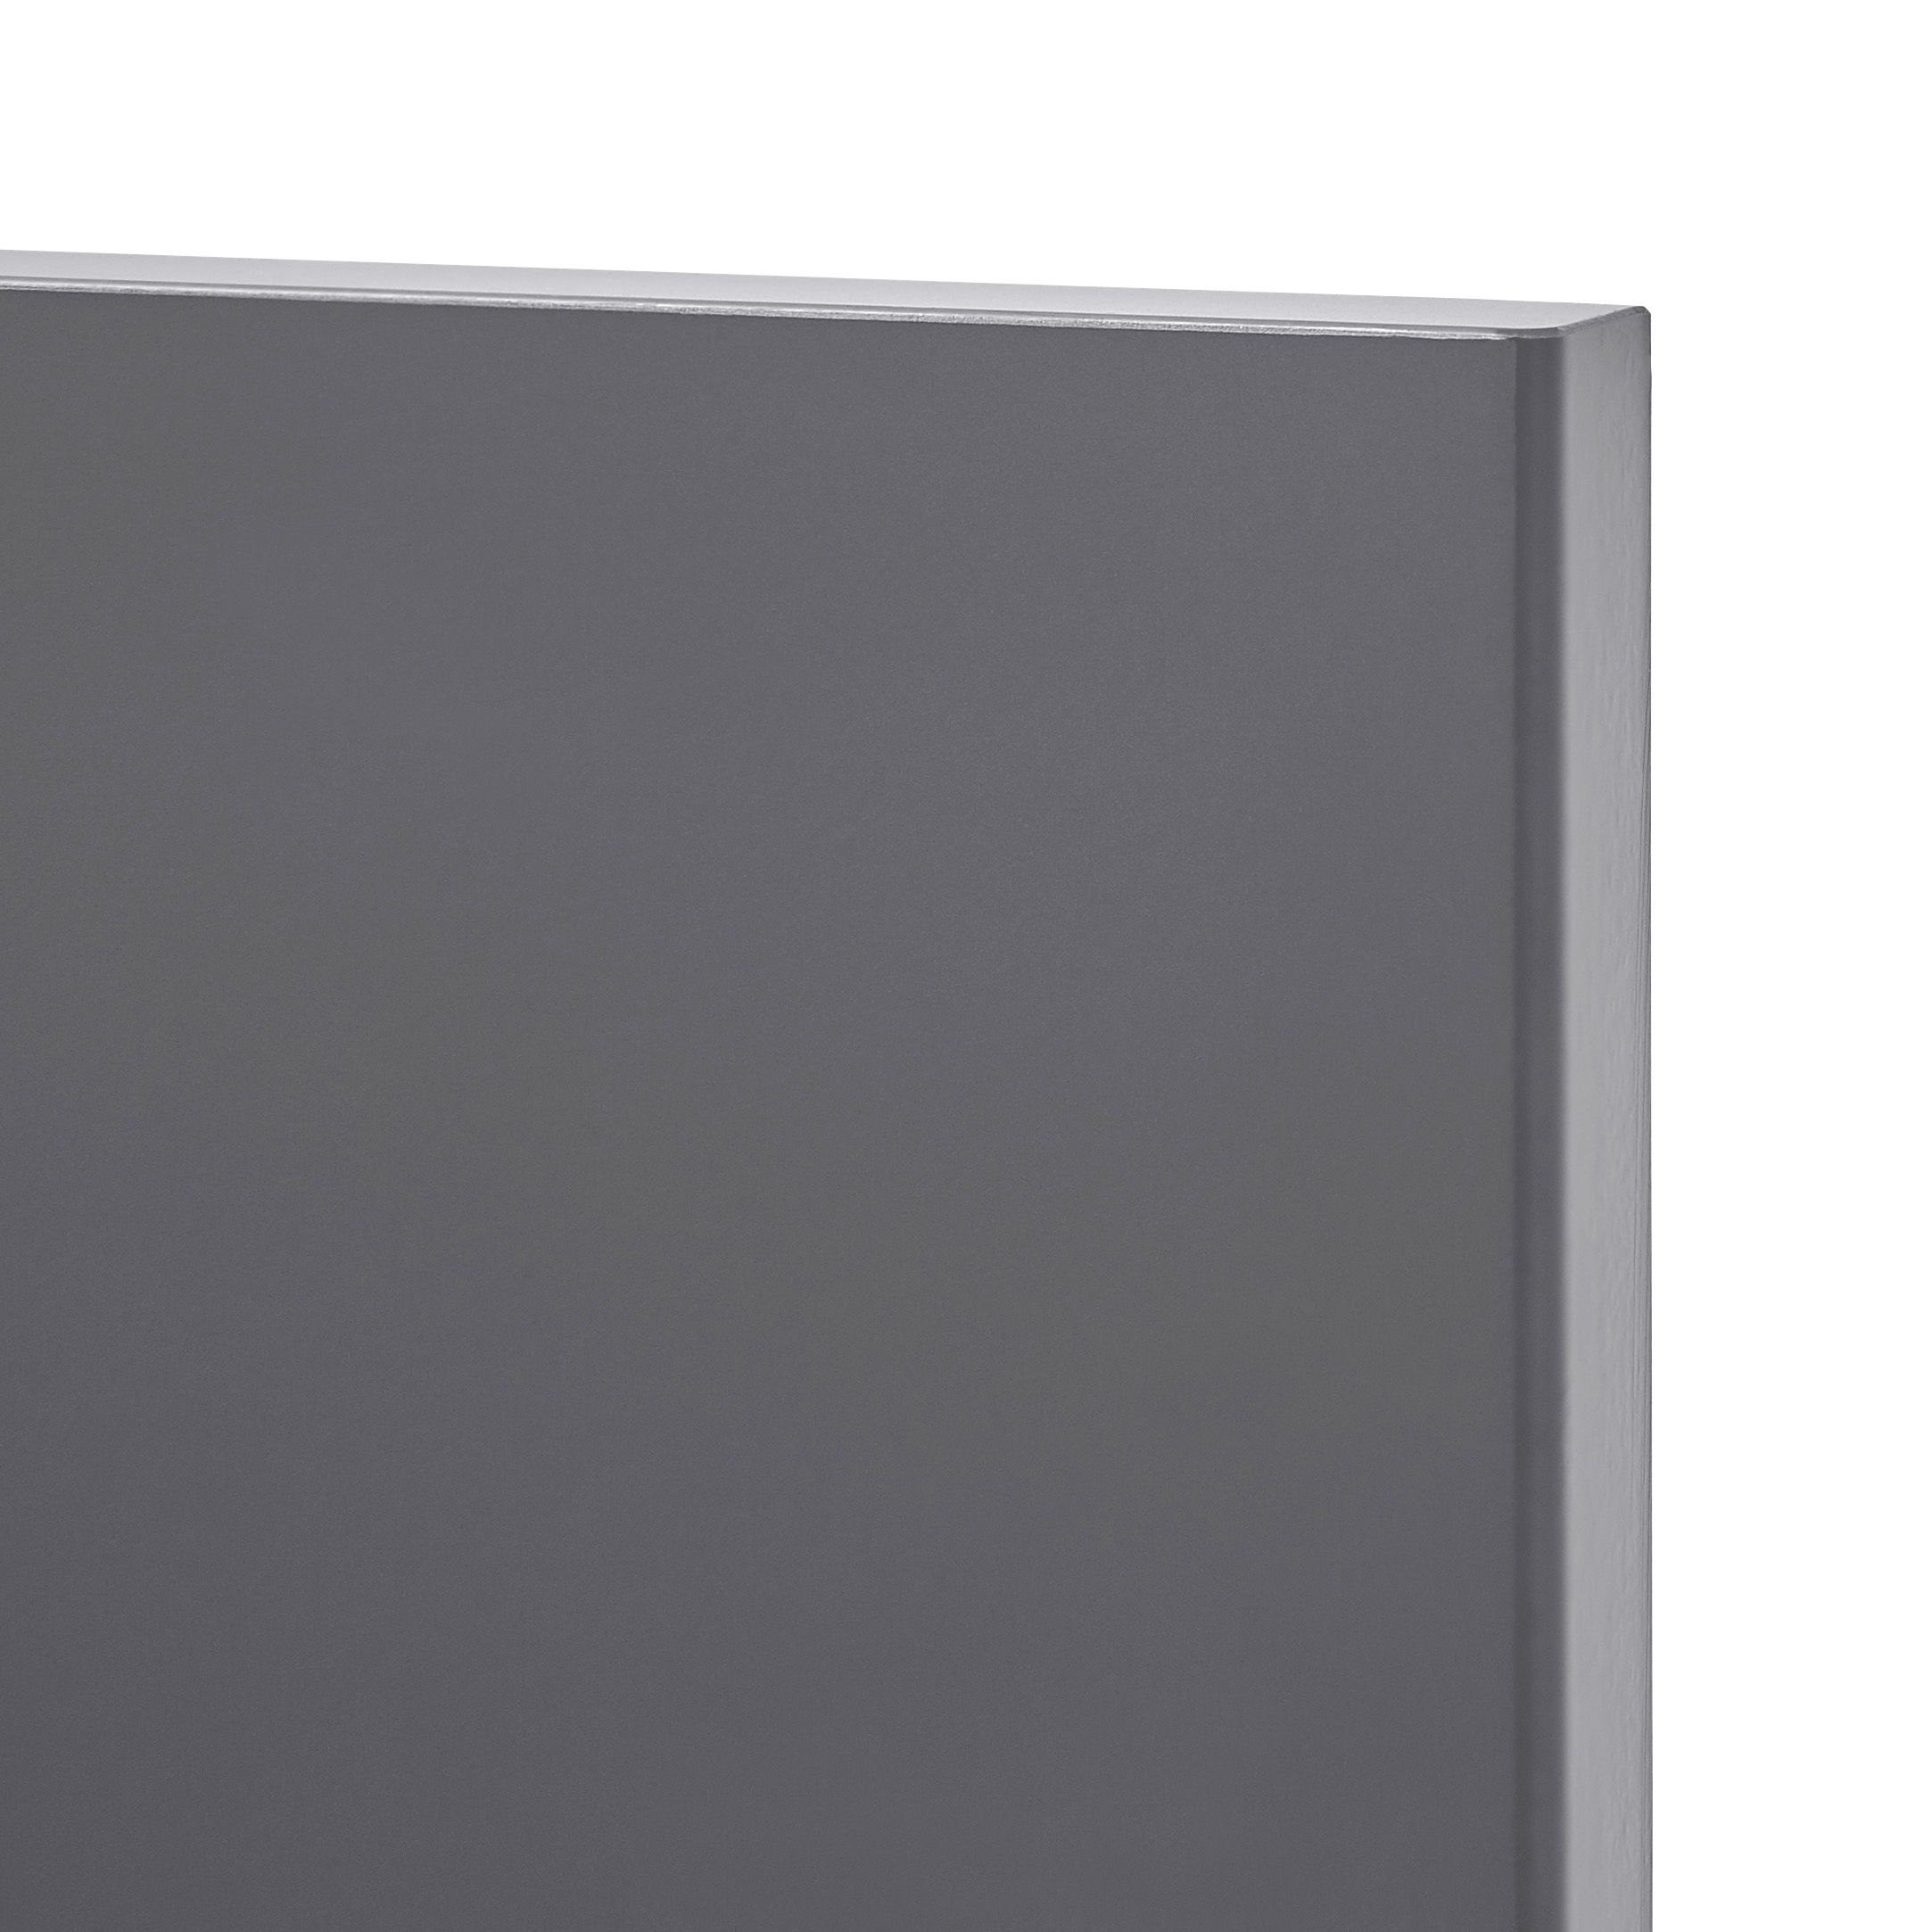 GoodHome Stevia Gloss anthracite slab Drawer front, bridging door & bi fold door, (W)800mm (H)356mm (T)18mm